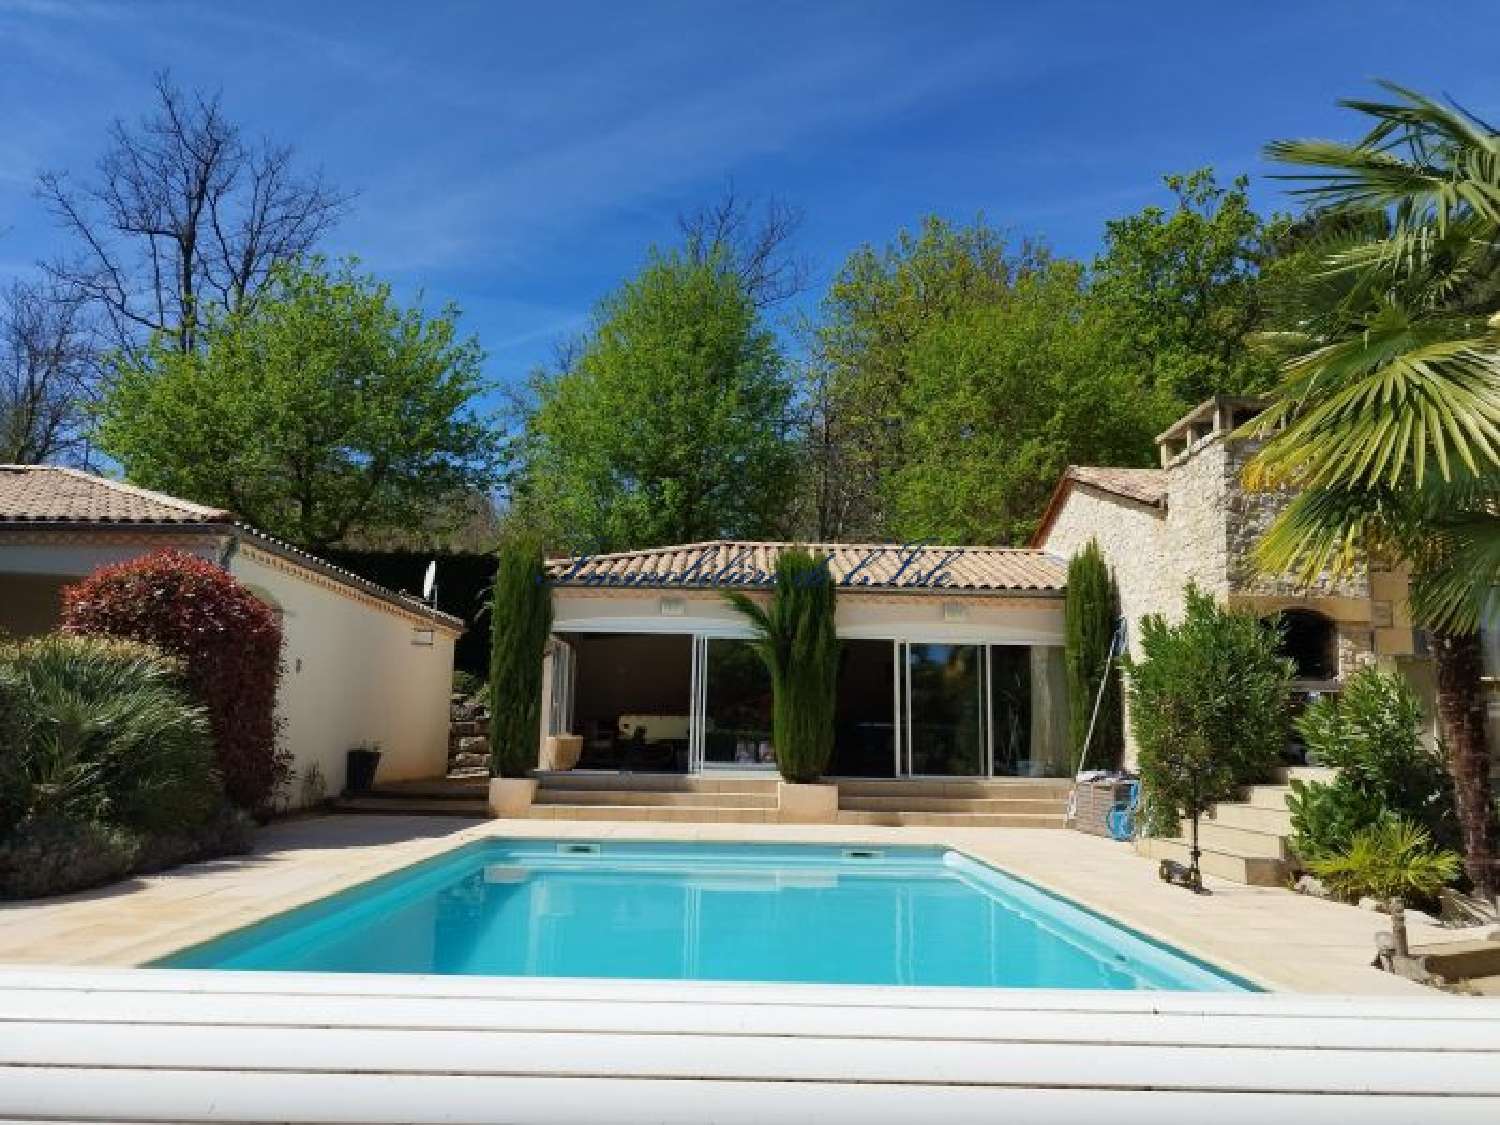  te koop huis Trélissac Dordogne 2